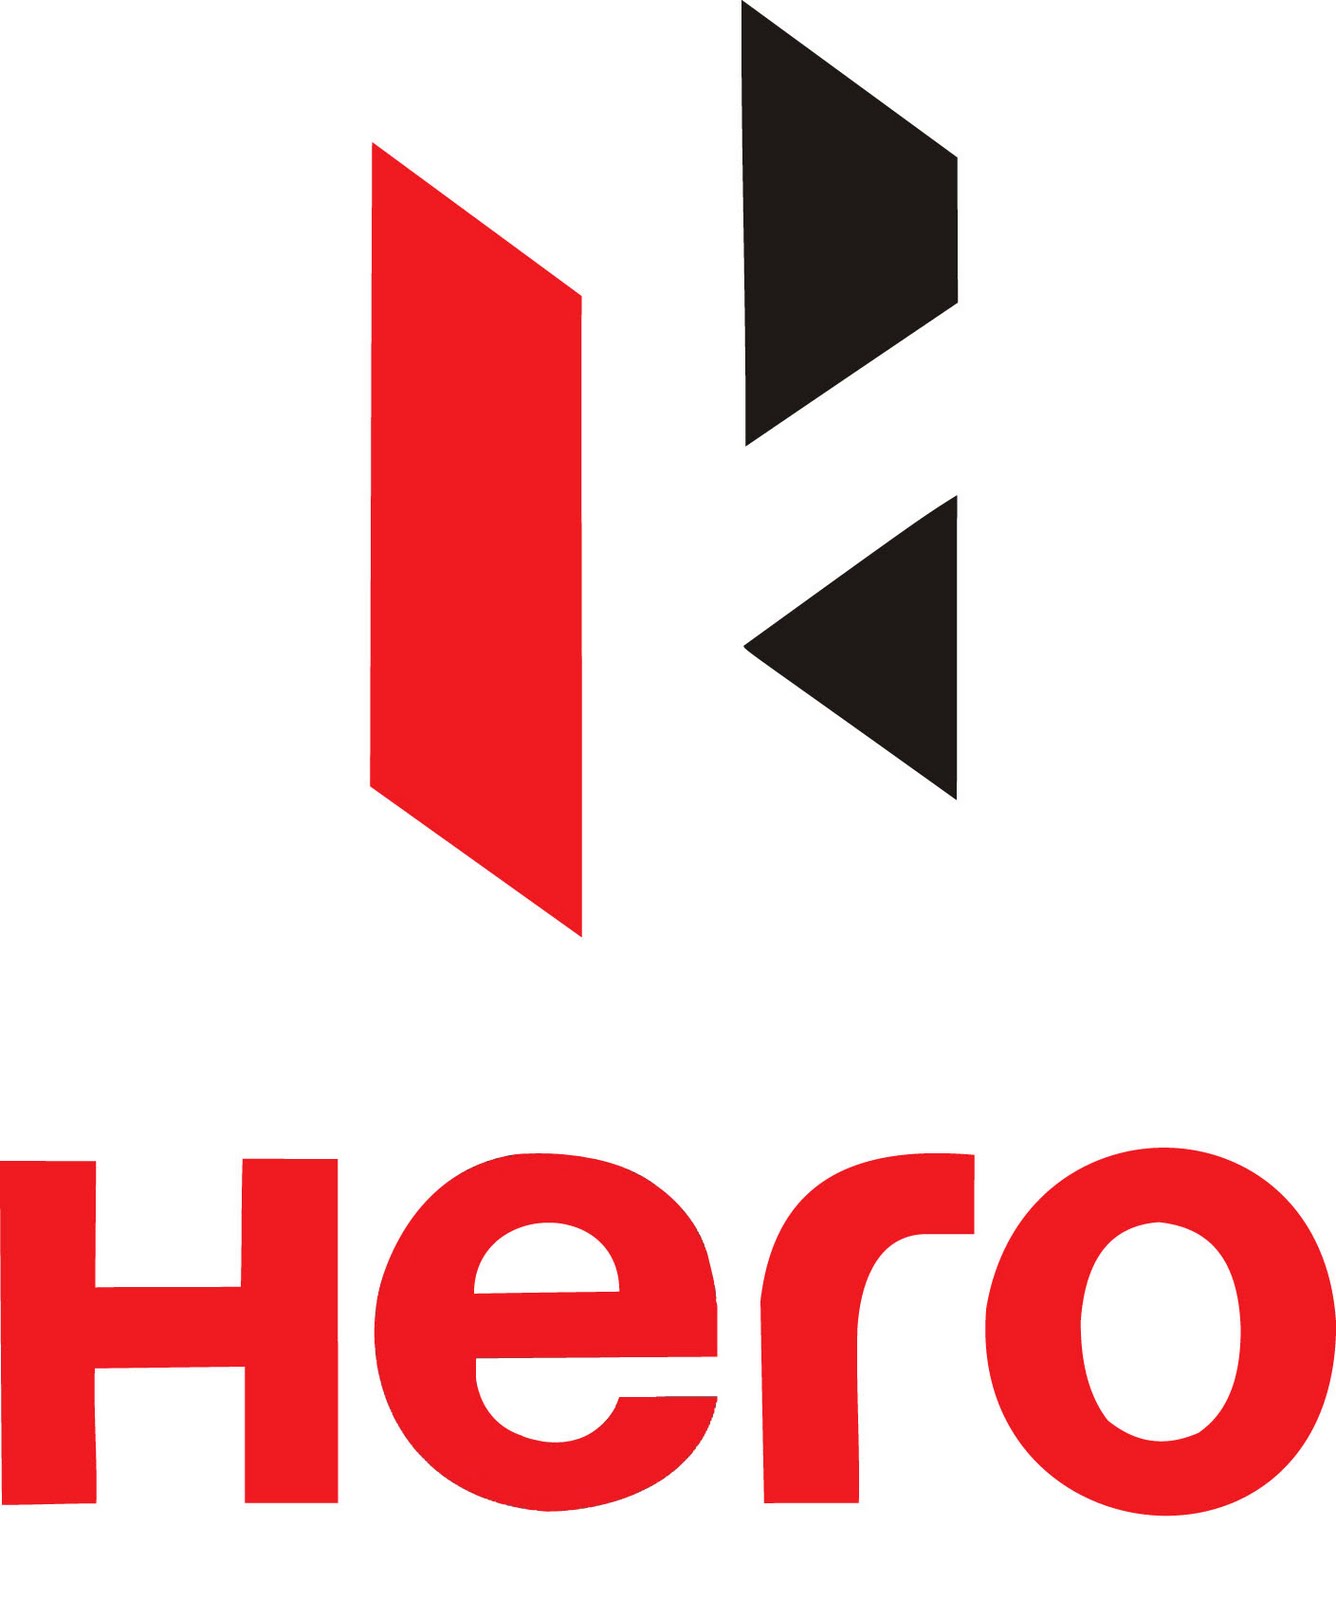 Hero honda logo free download #1